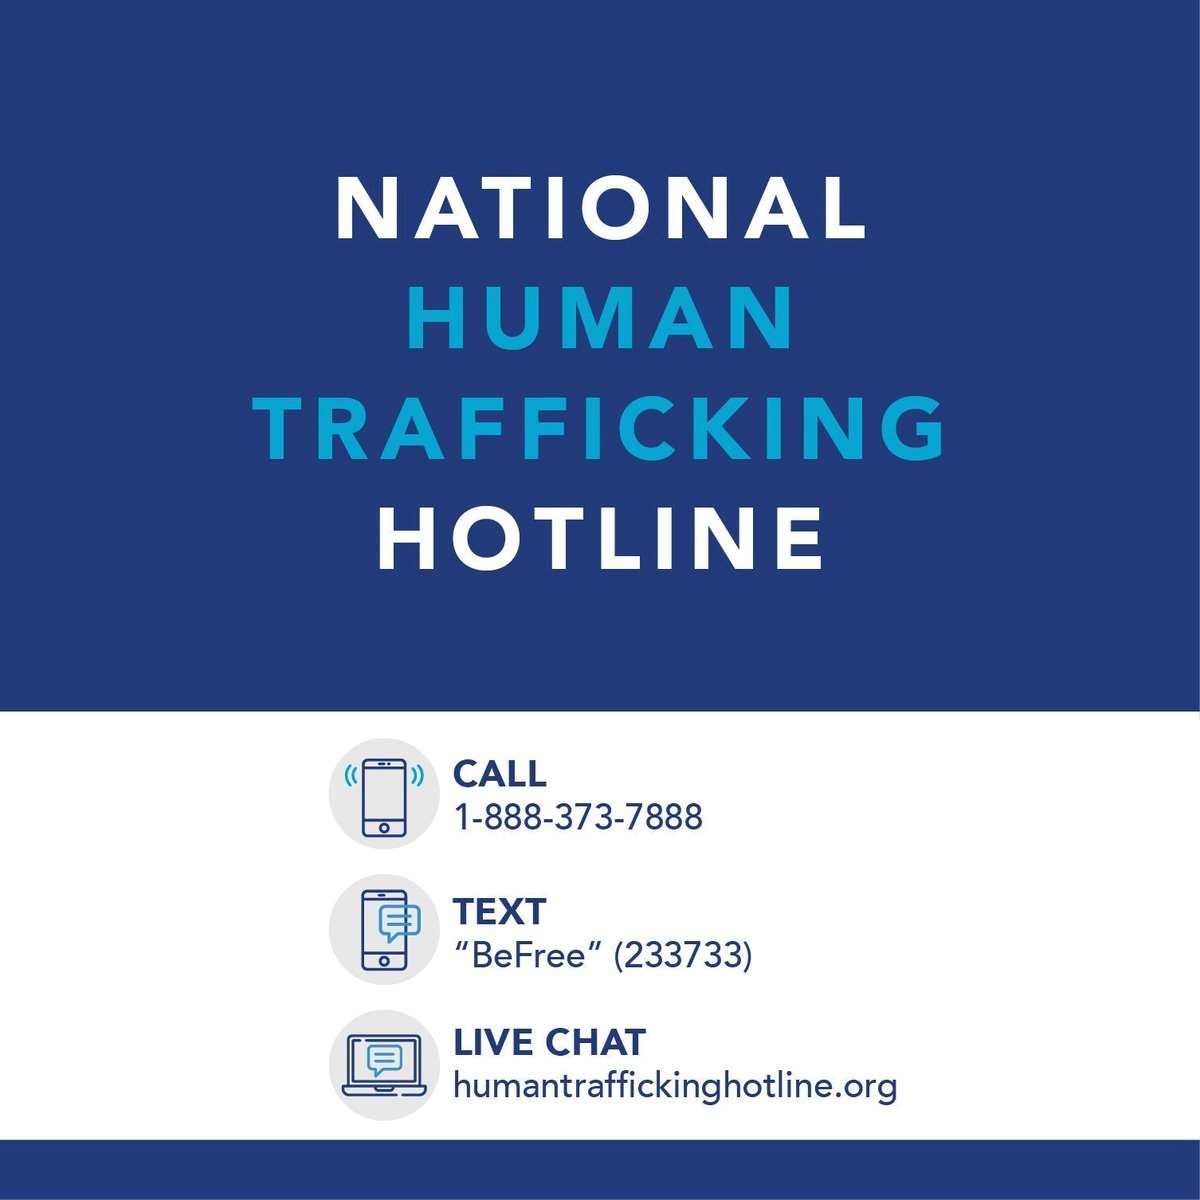 Natl Human Trafficking Hotline contact info